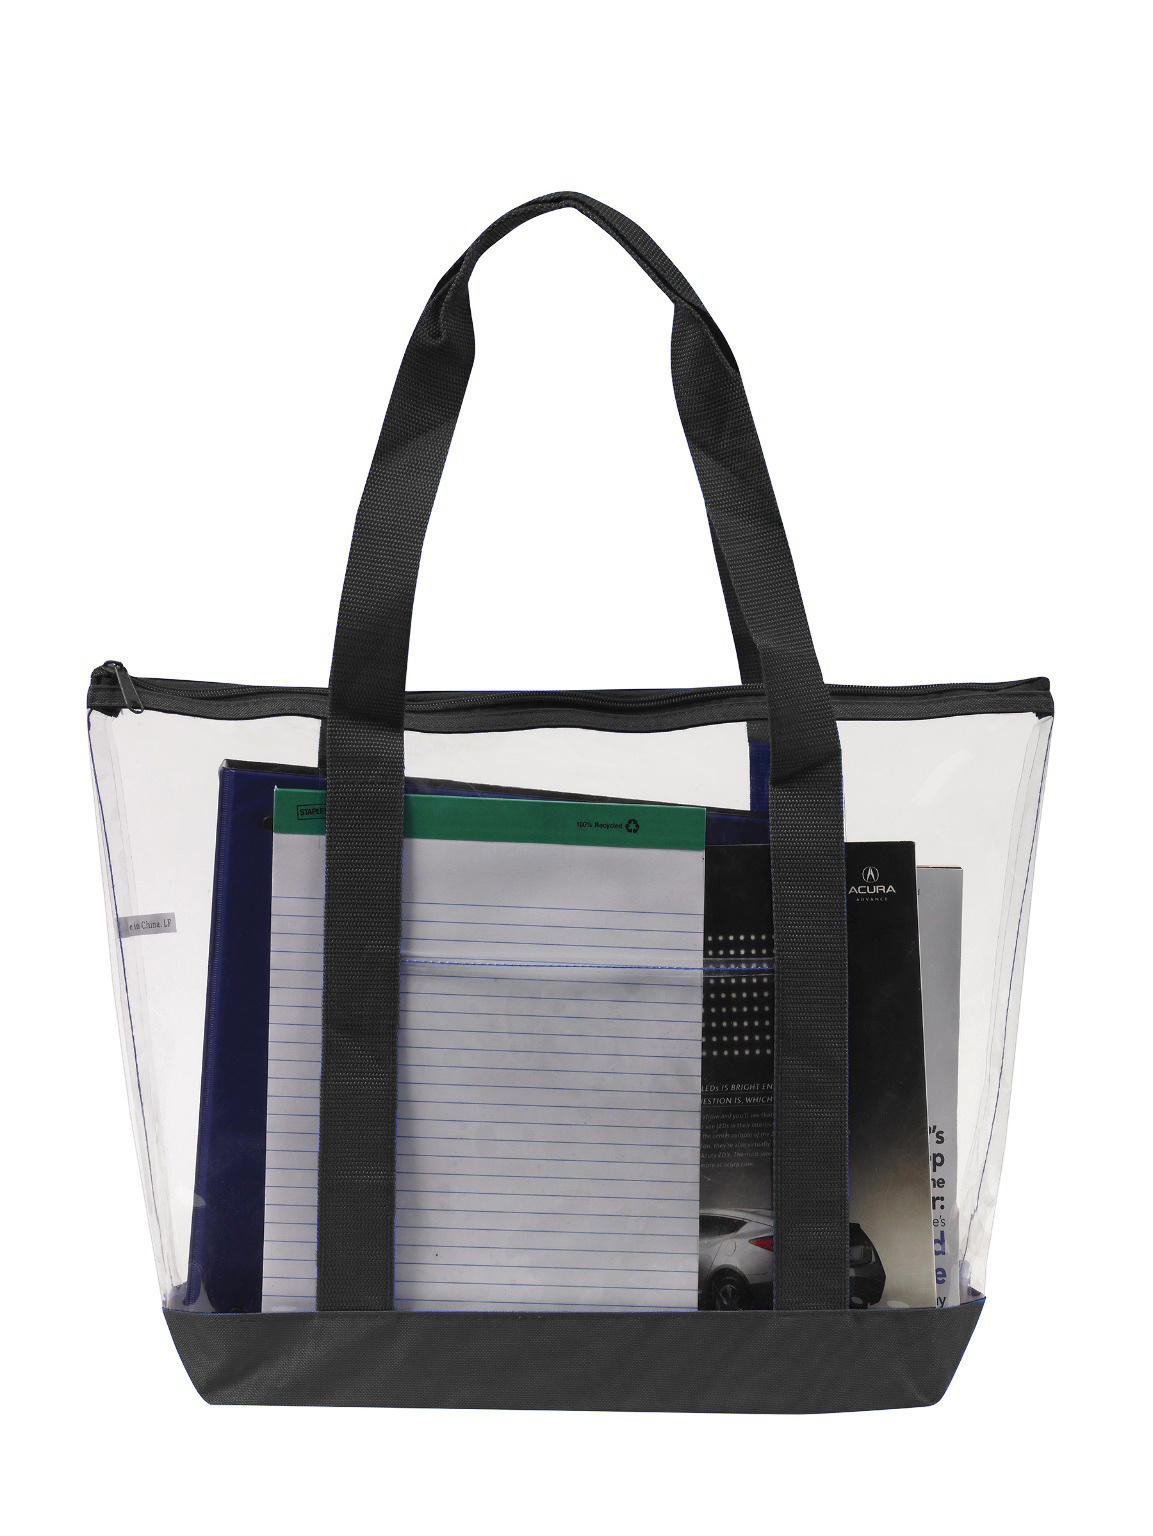 Wholesale Clear Zipper Tote Security Bag with Pocket - Black (SKU 2326934) DollarDays